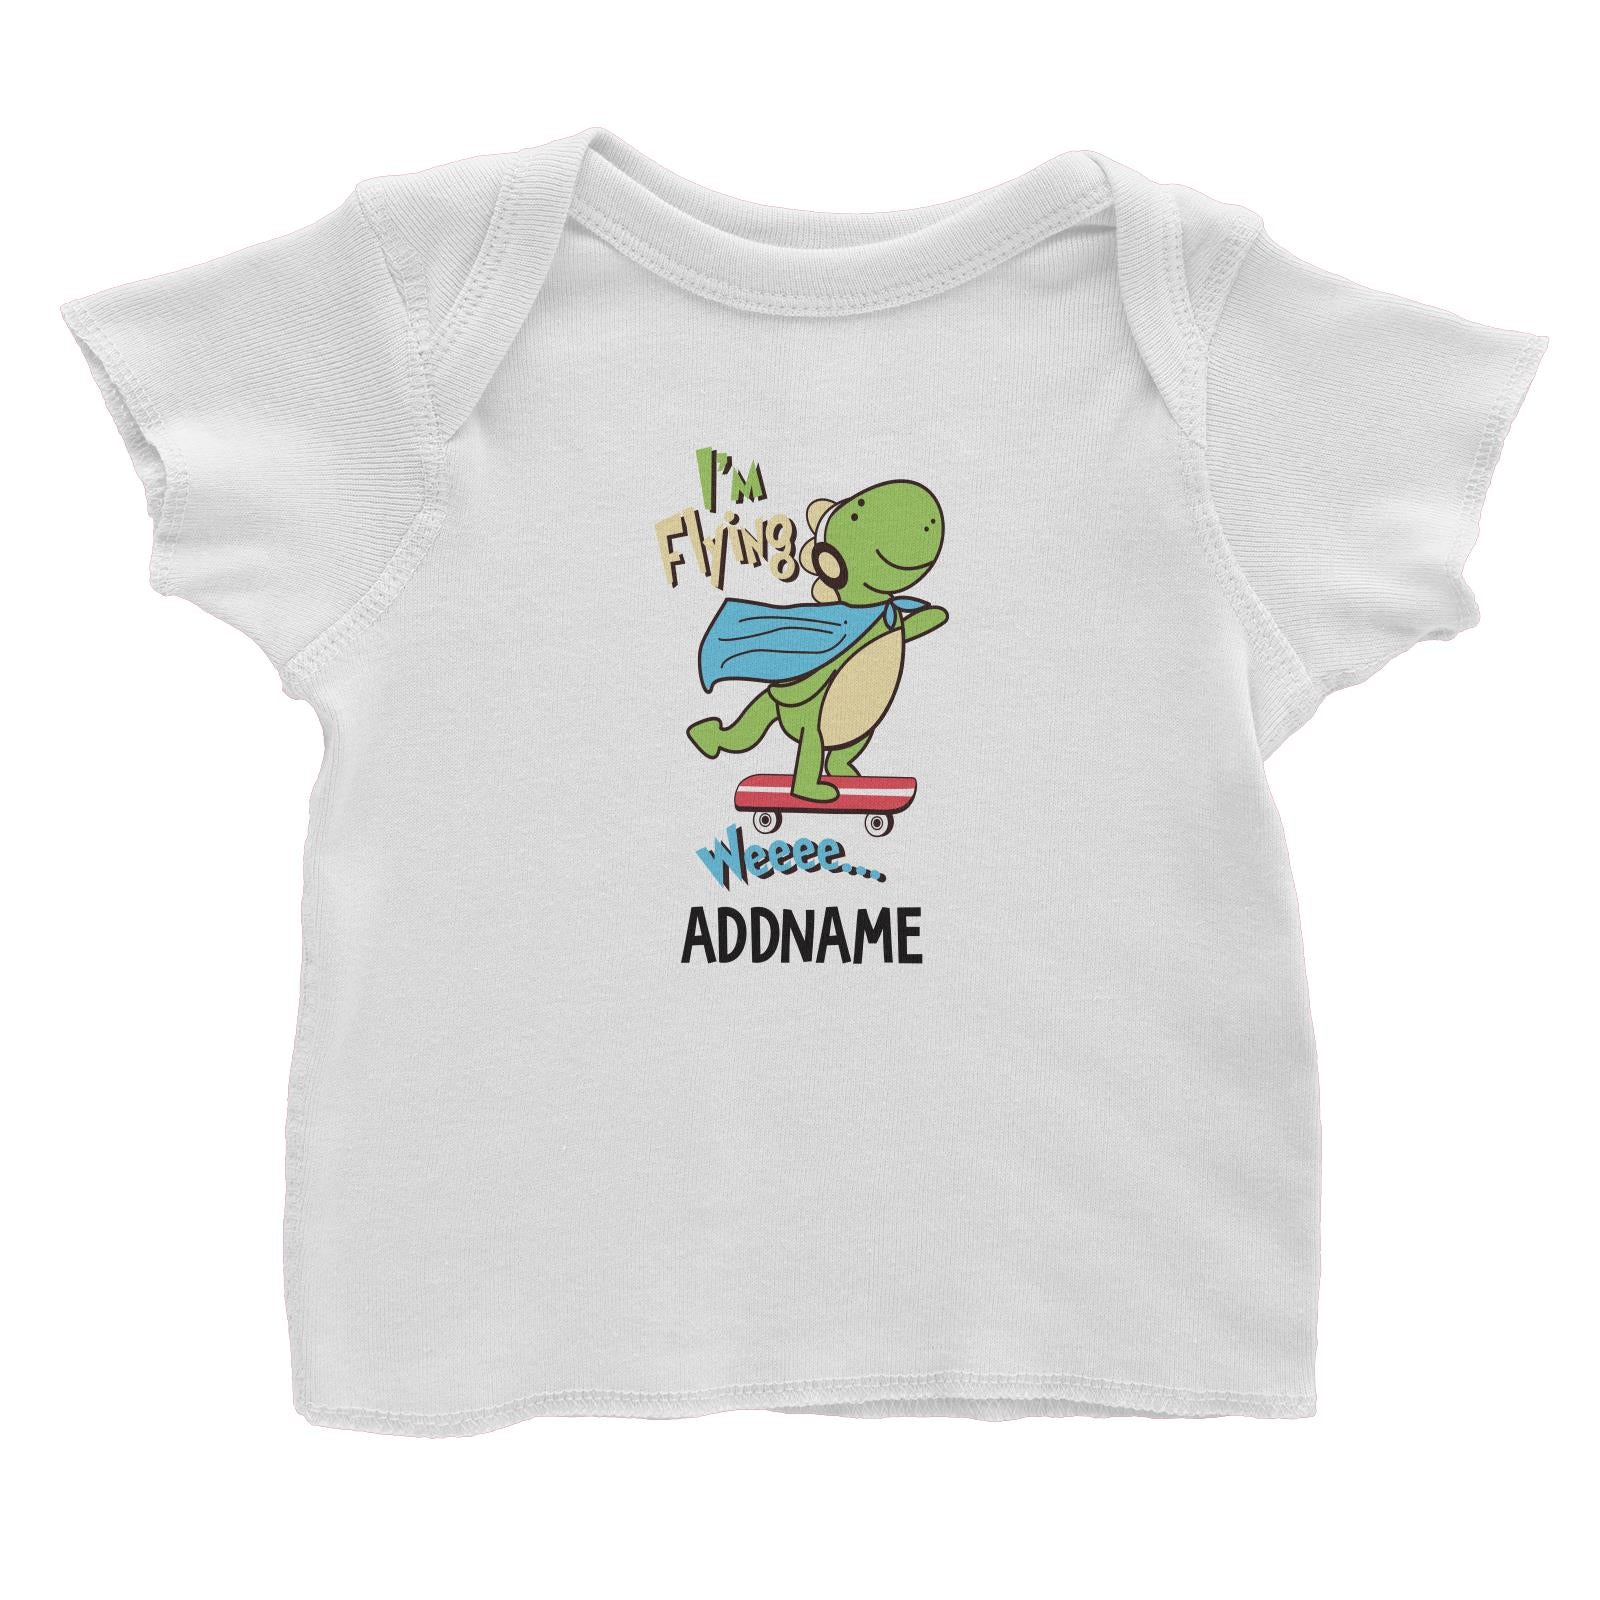 Cool Vibrant Series I'm Flying Dinosaur on Skateboard Addname Baby T-Shirt [SALE]